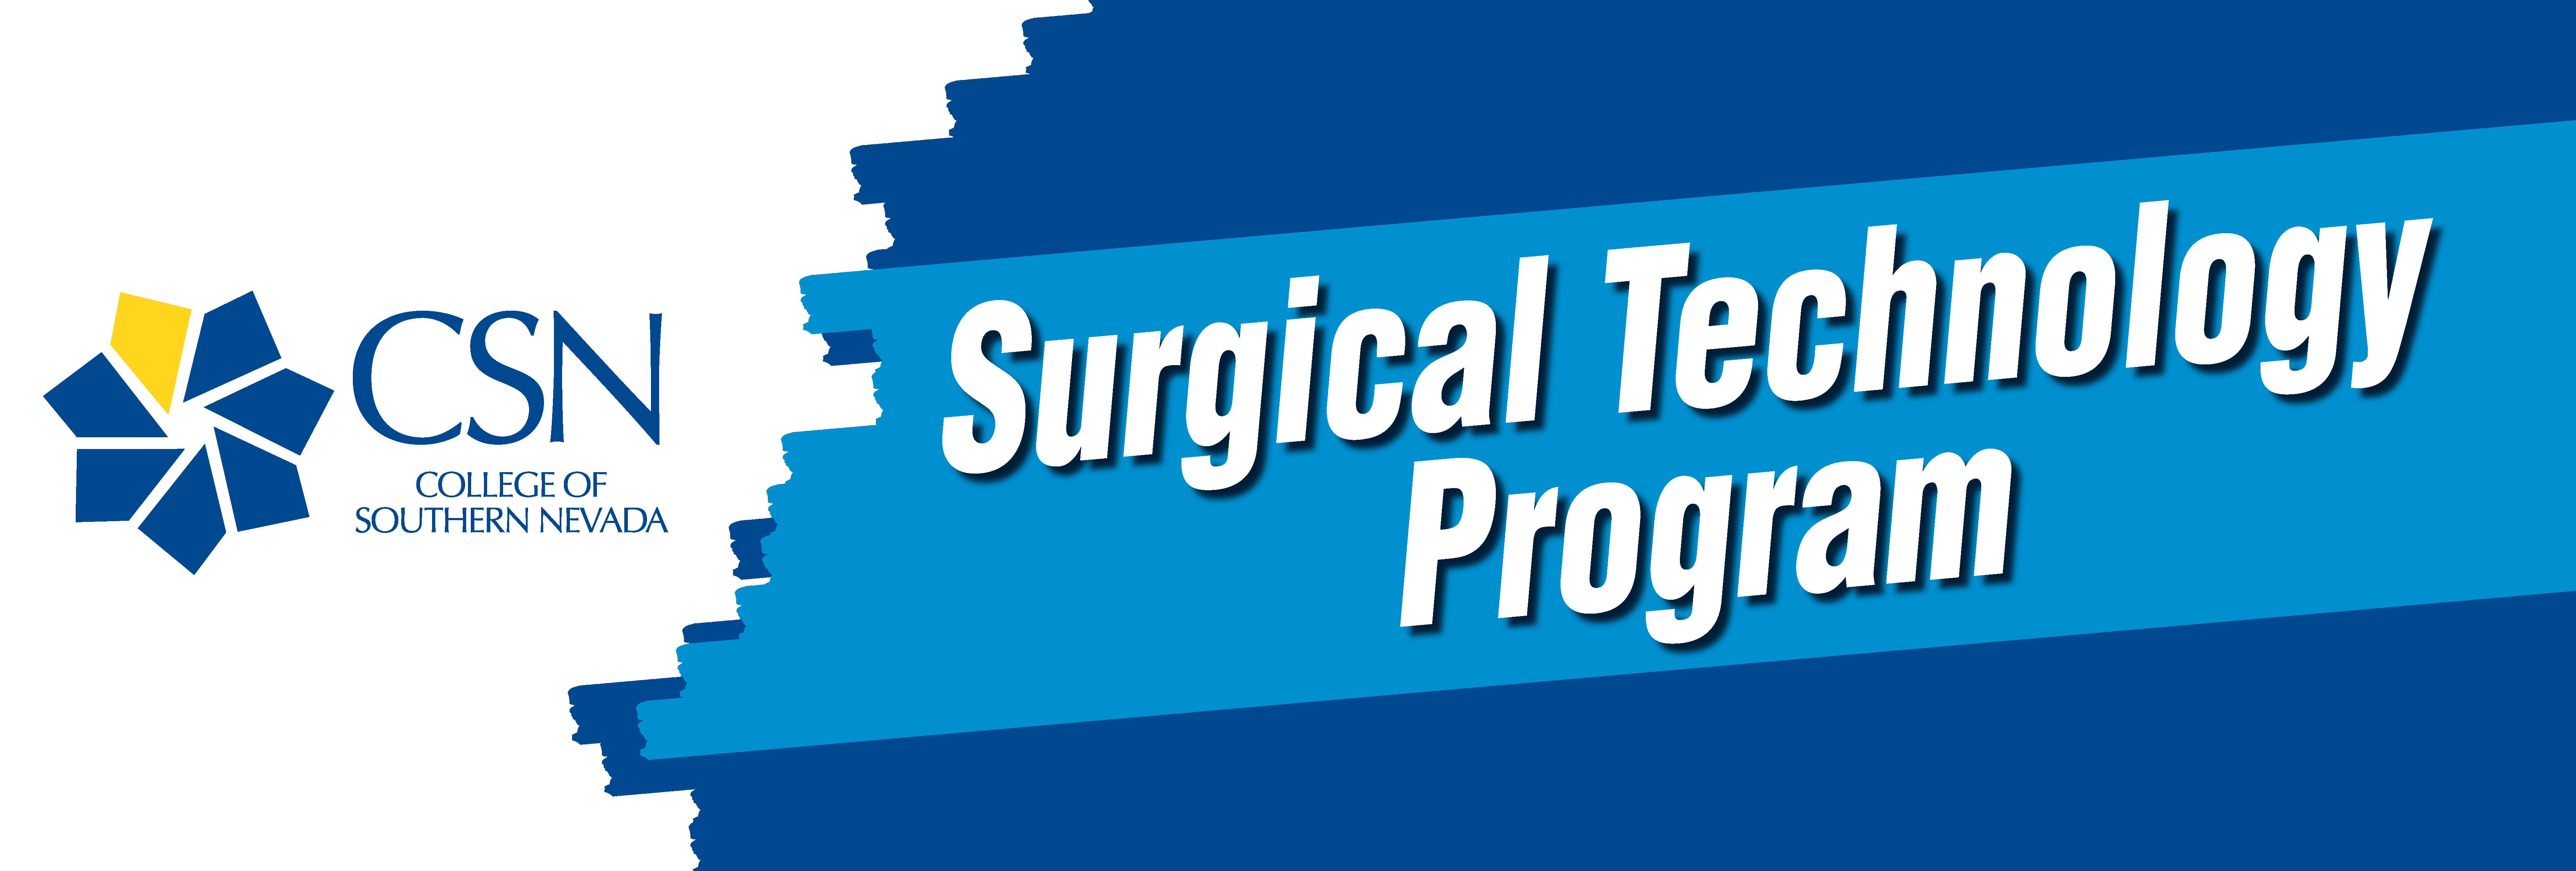 Surgical Technology Program banner